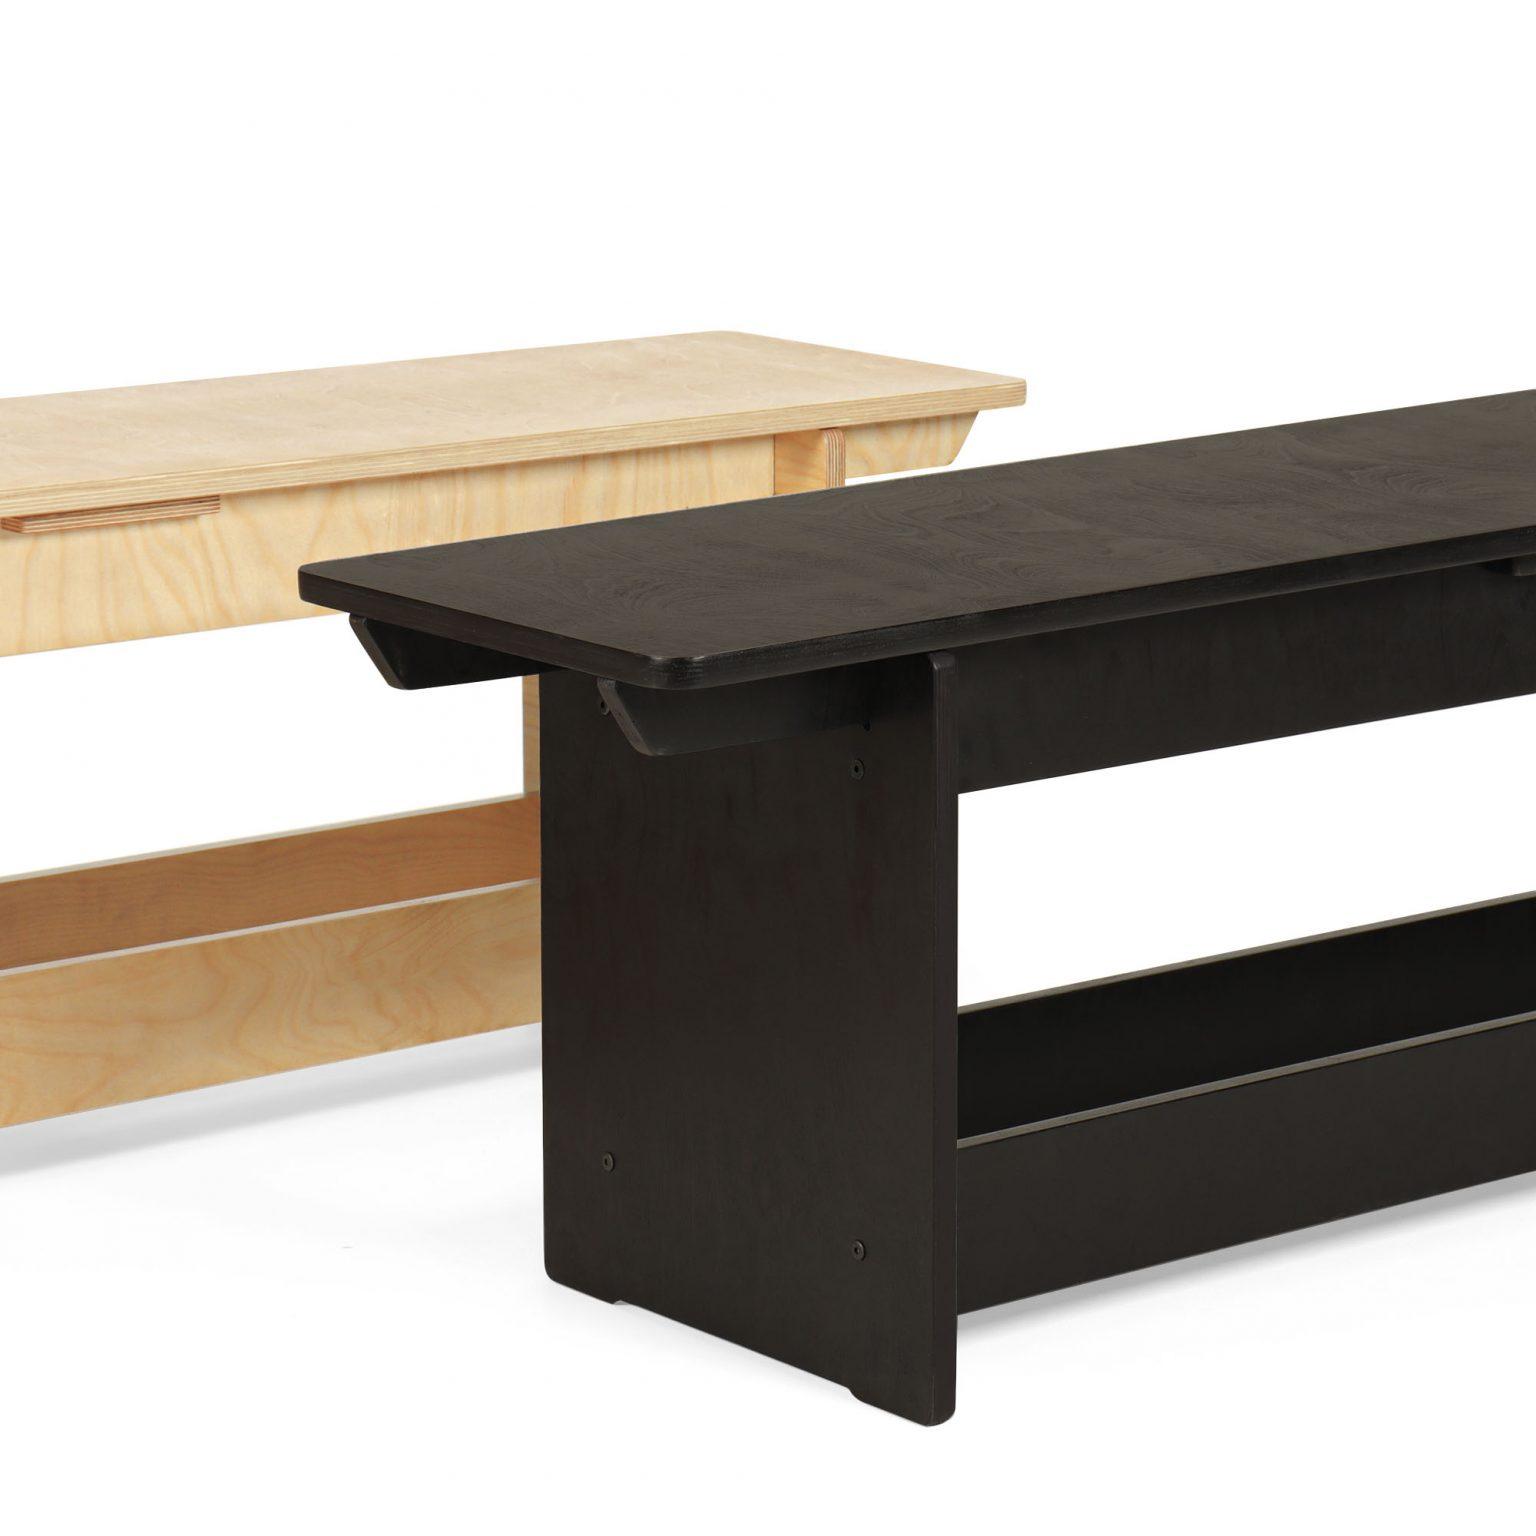 Zedi – Multipurpose bench